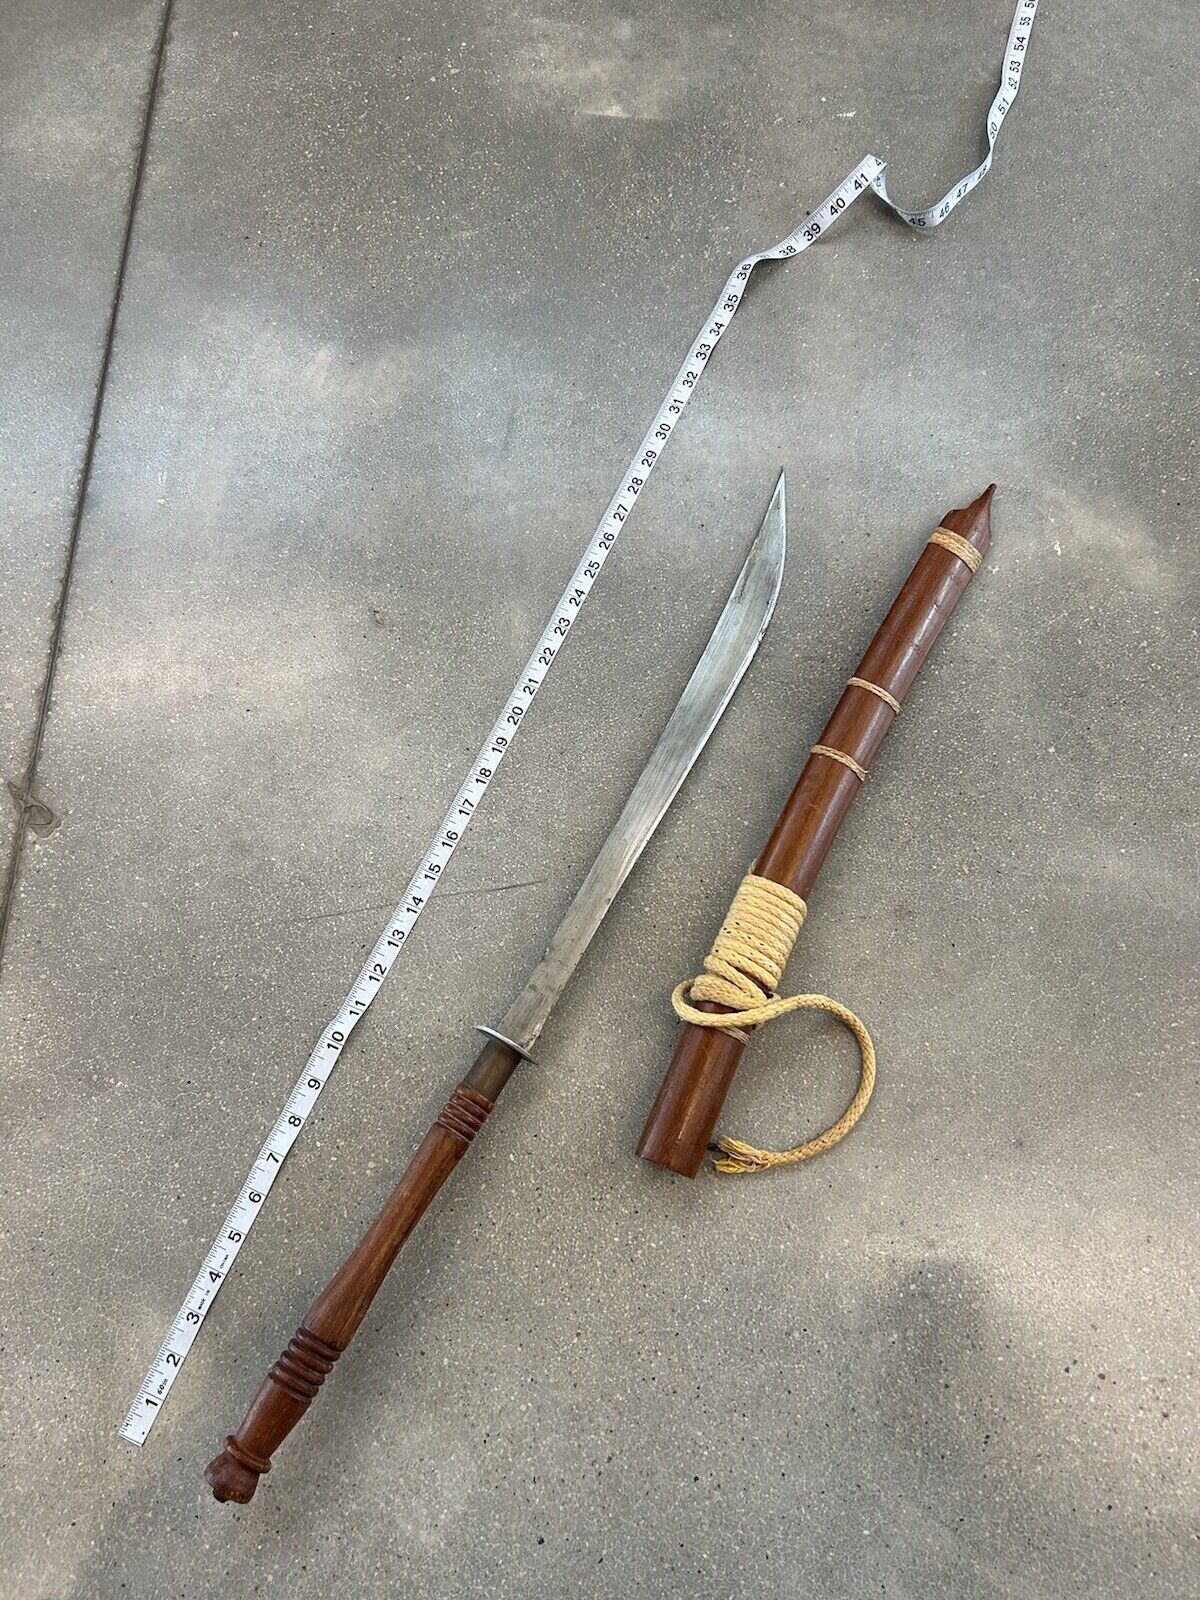 Vintage dah/daab Thai/Vietnam Sword with Sheath